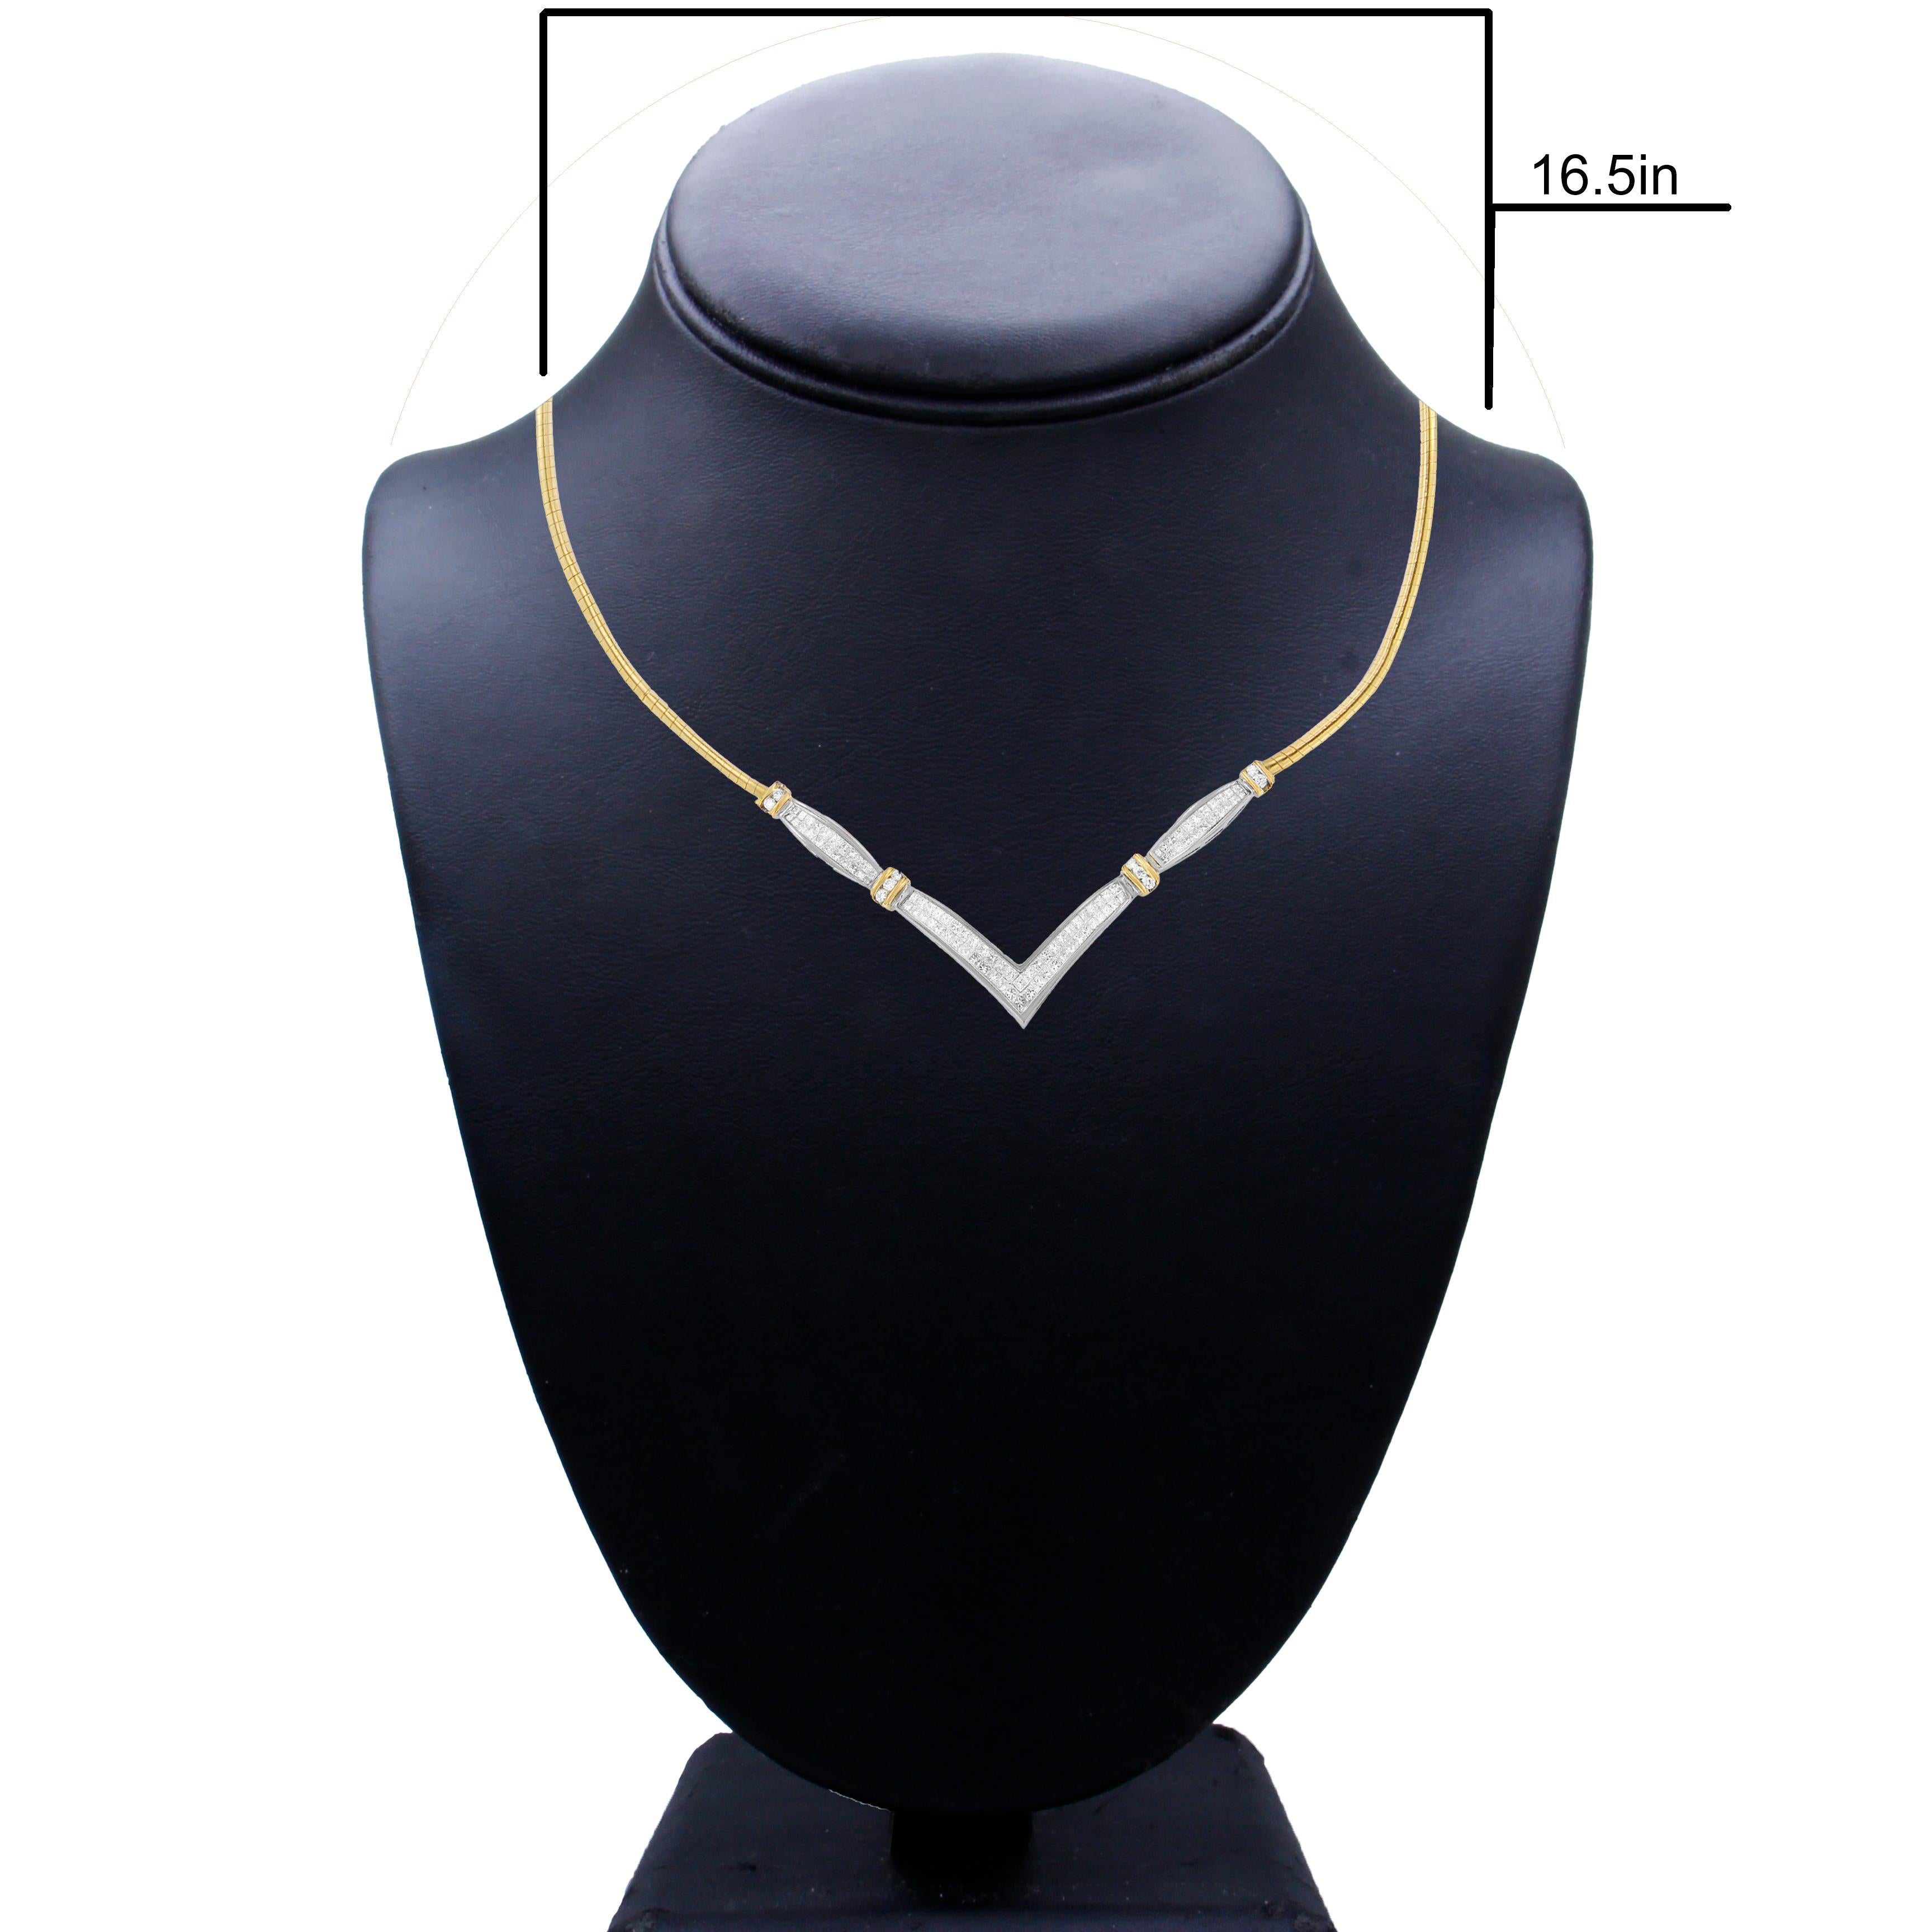 v shaped statement necklace